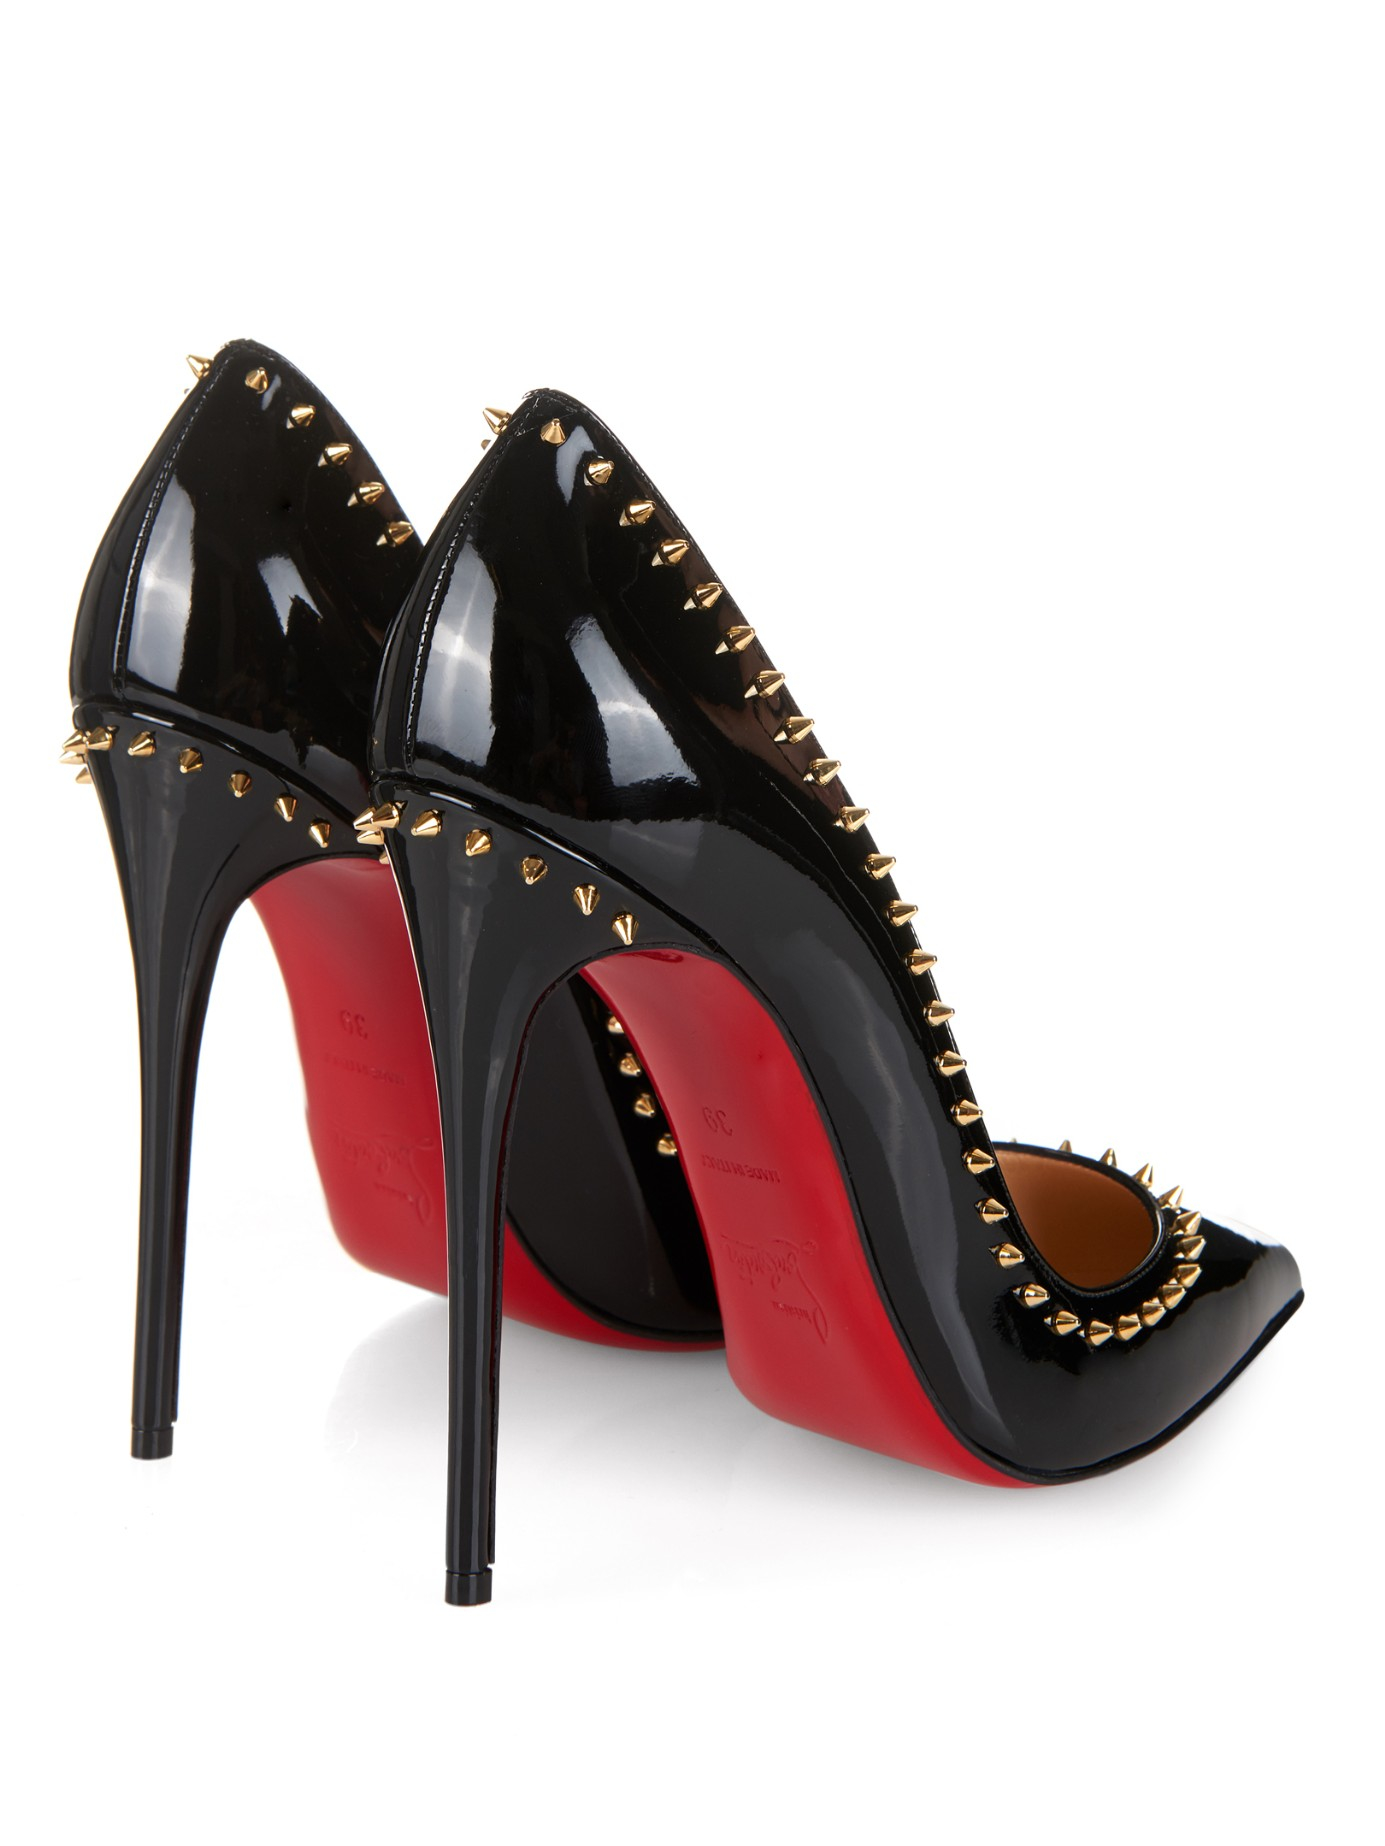 louboutin black spiked heels